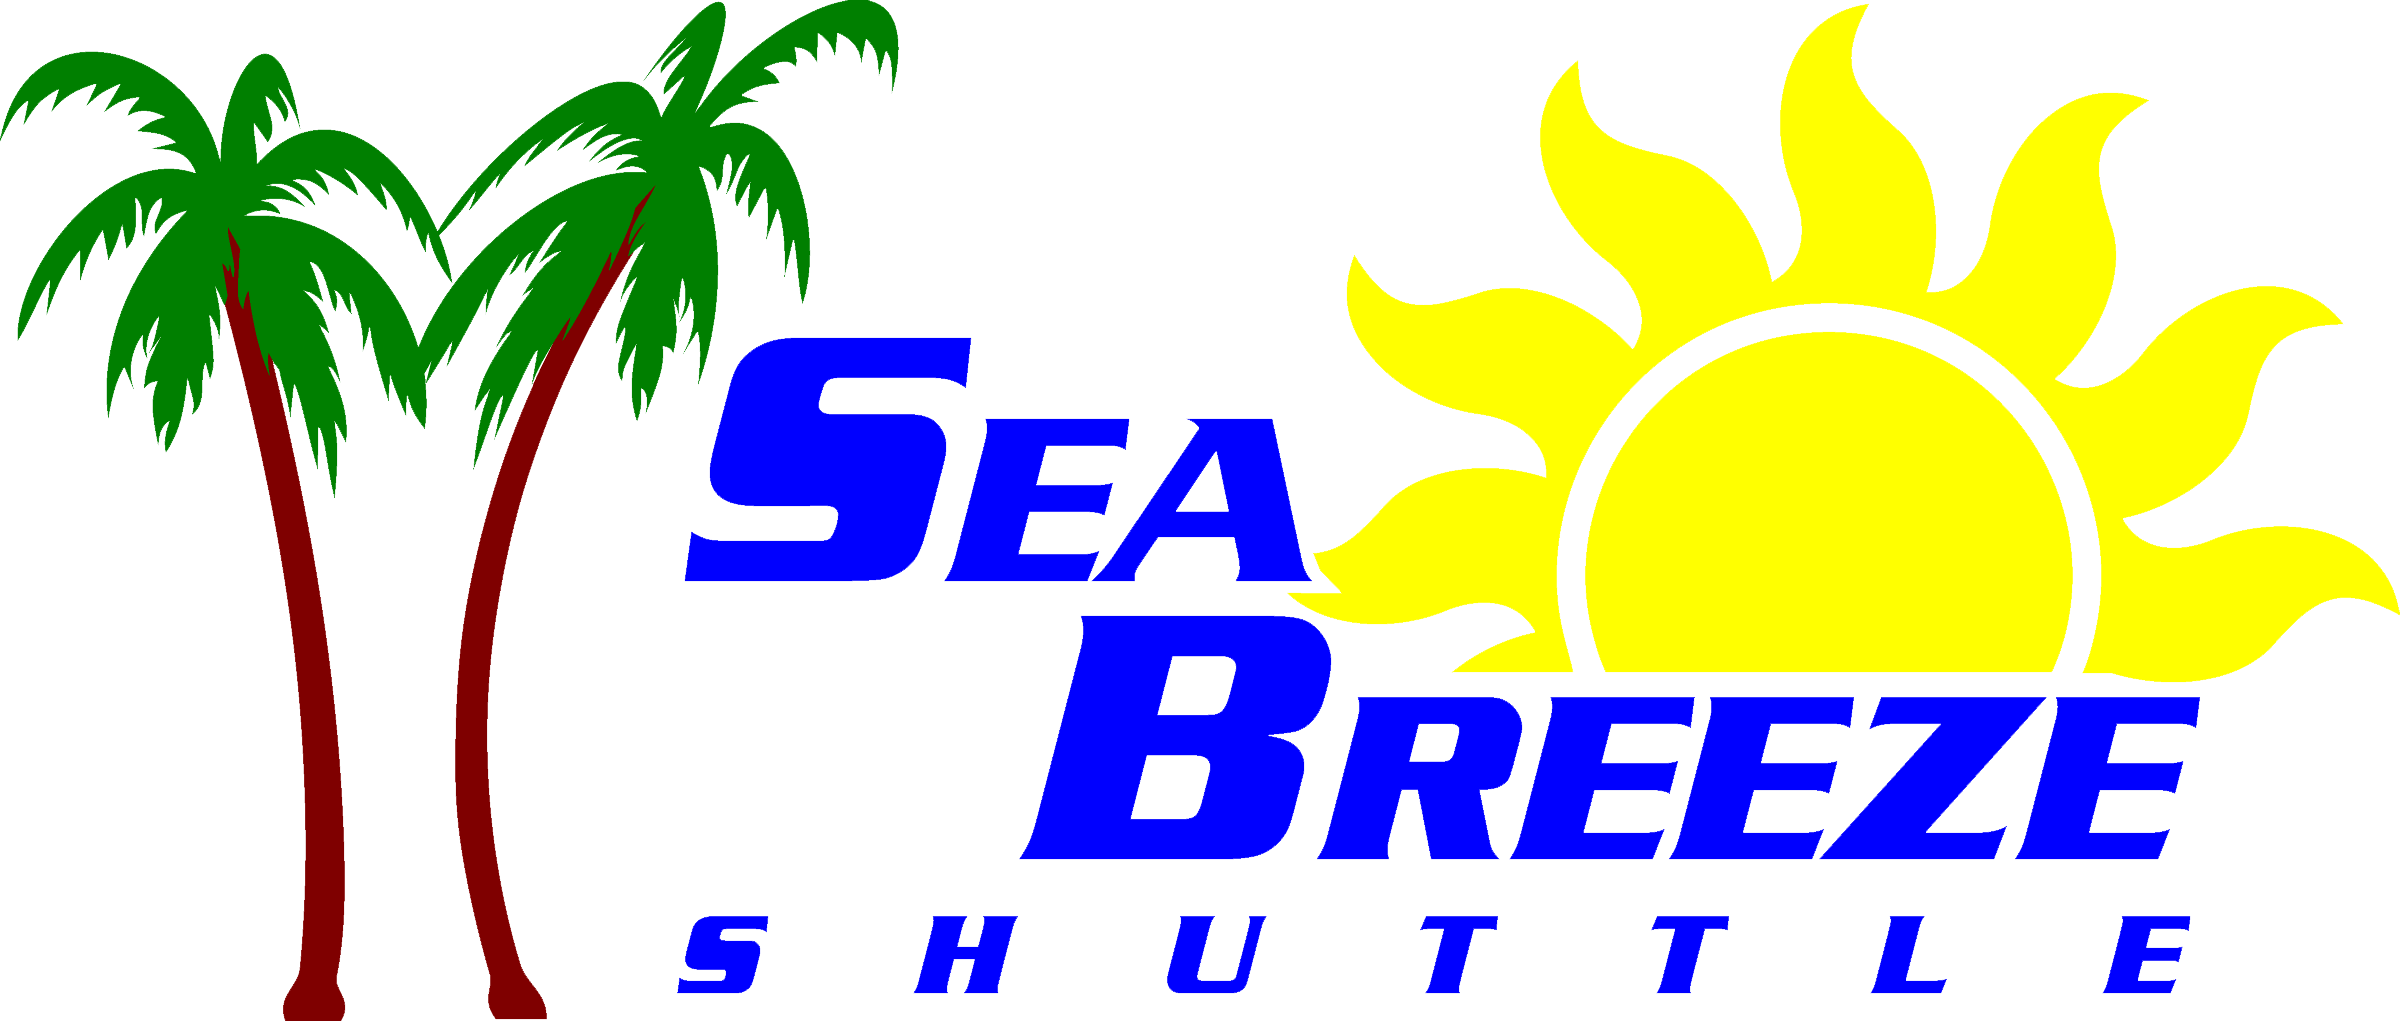 logo seabreeze copy